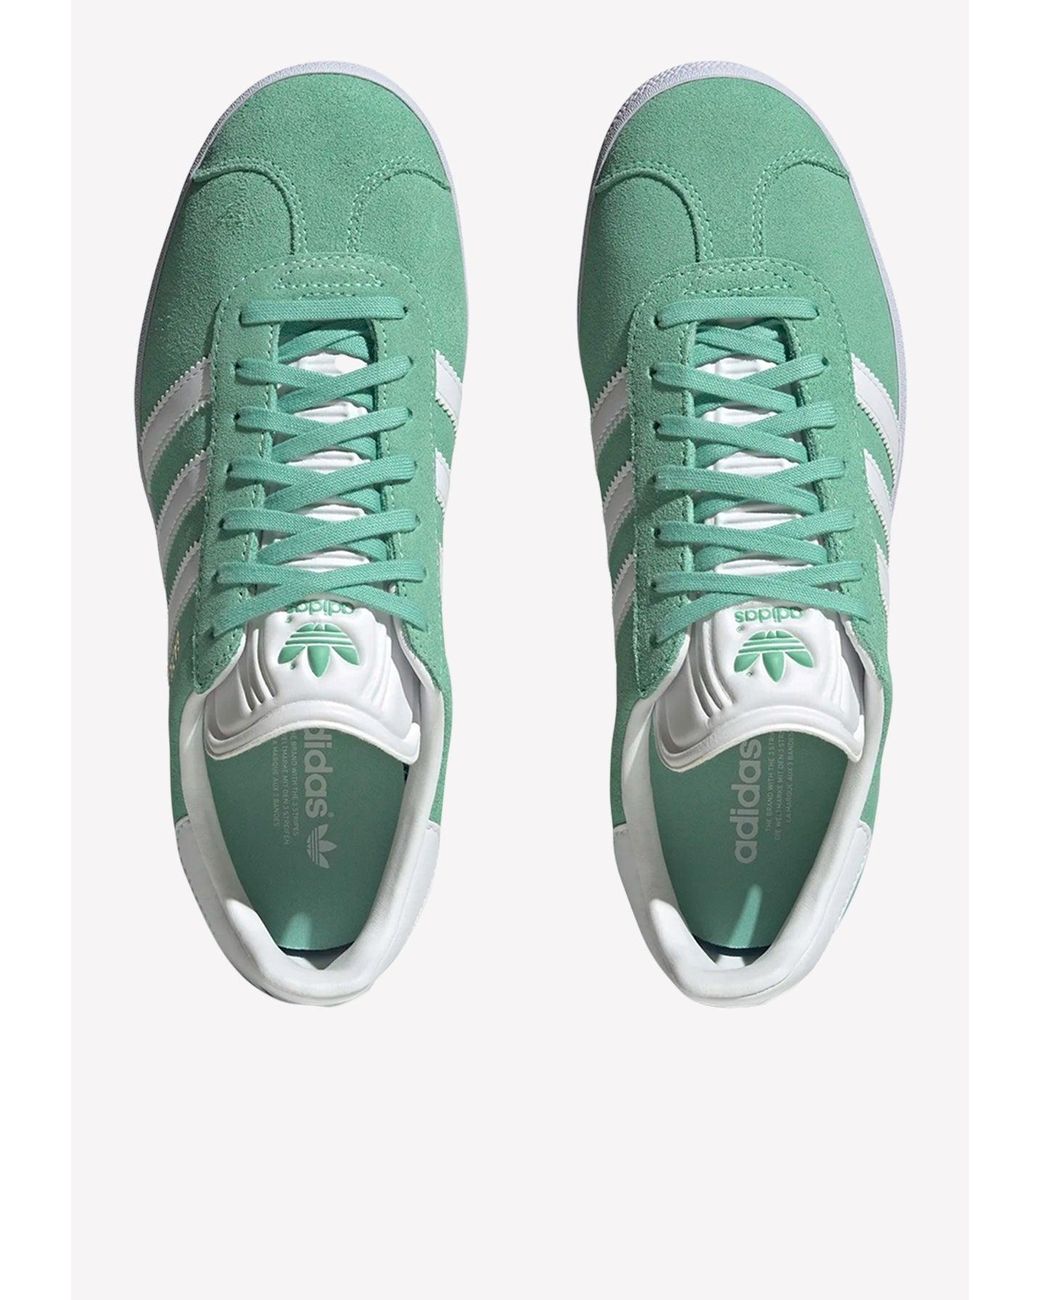 adidas Originals Gazelle Trainers in Green | Lyst